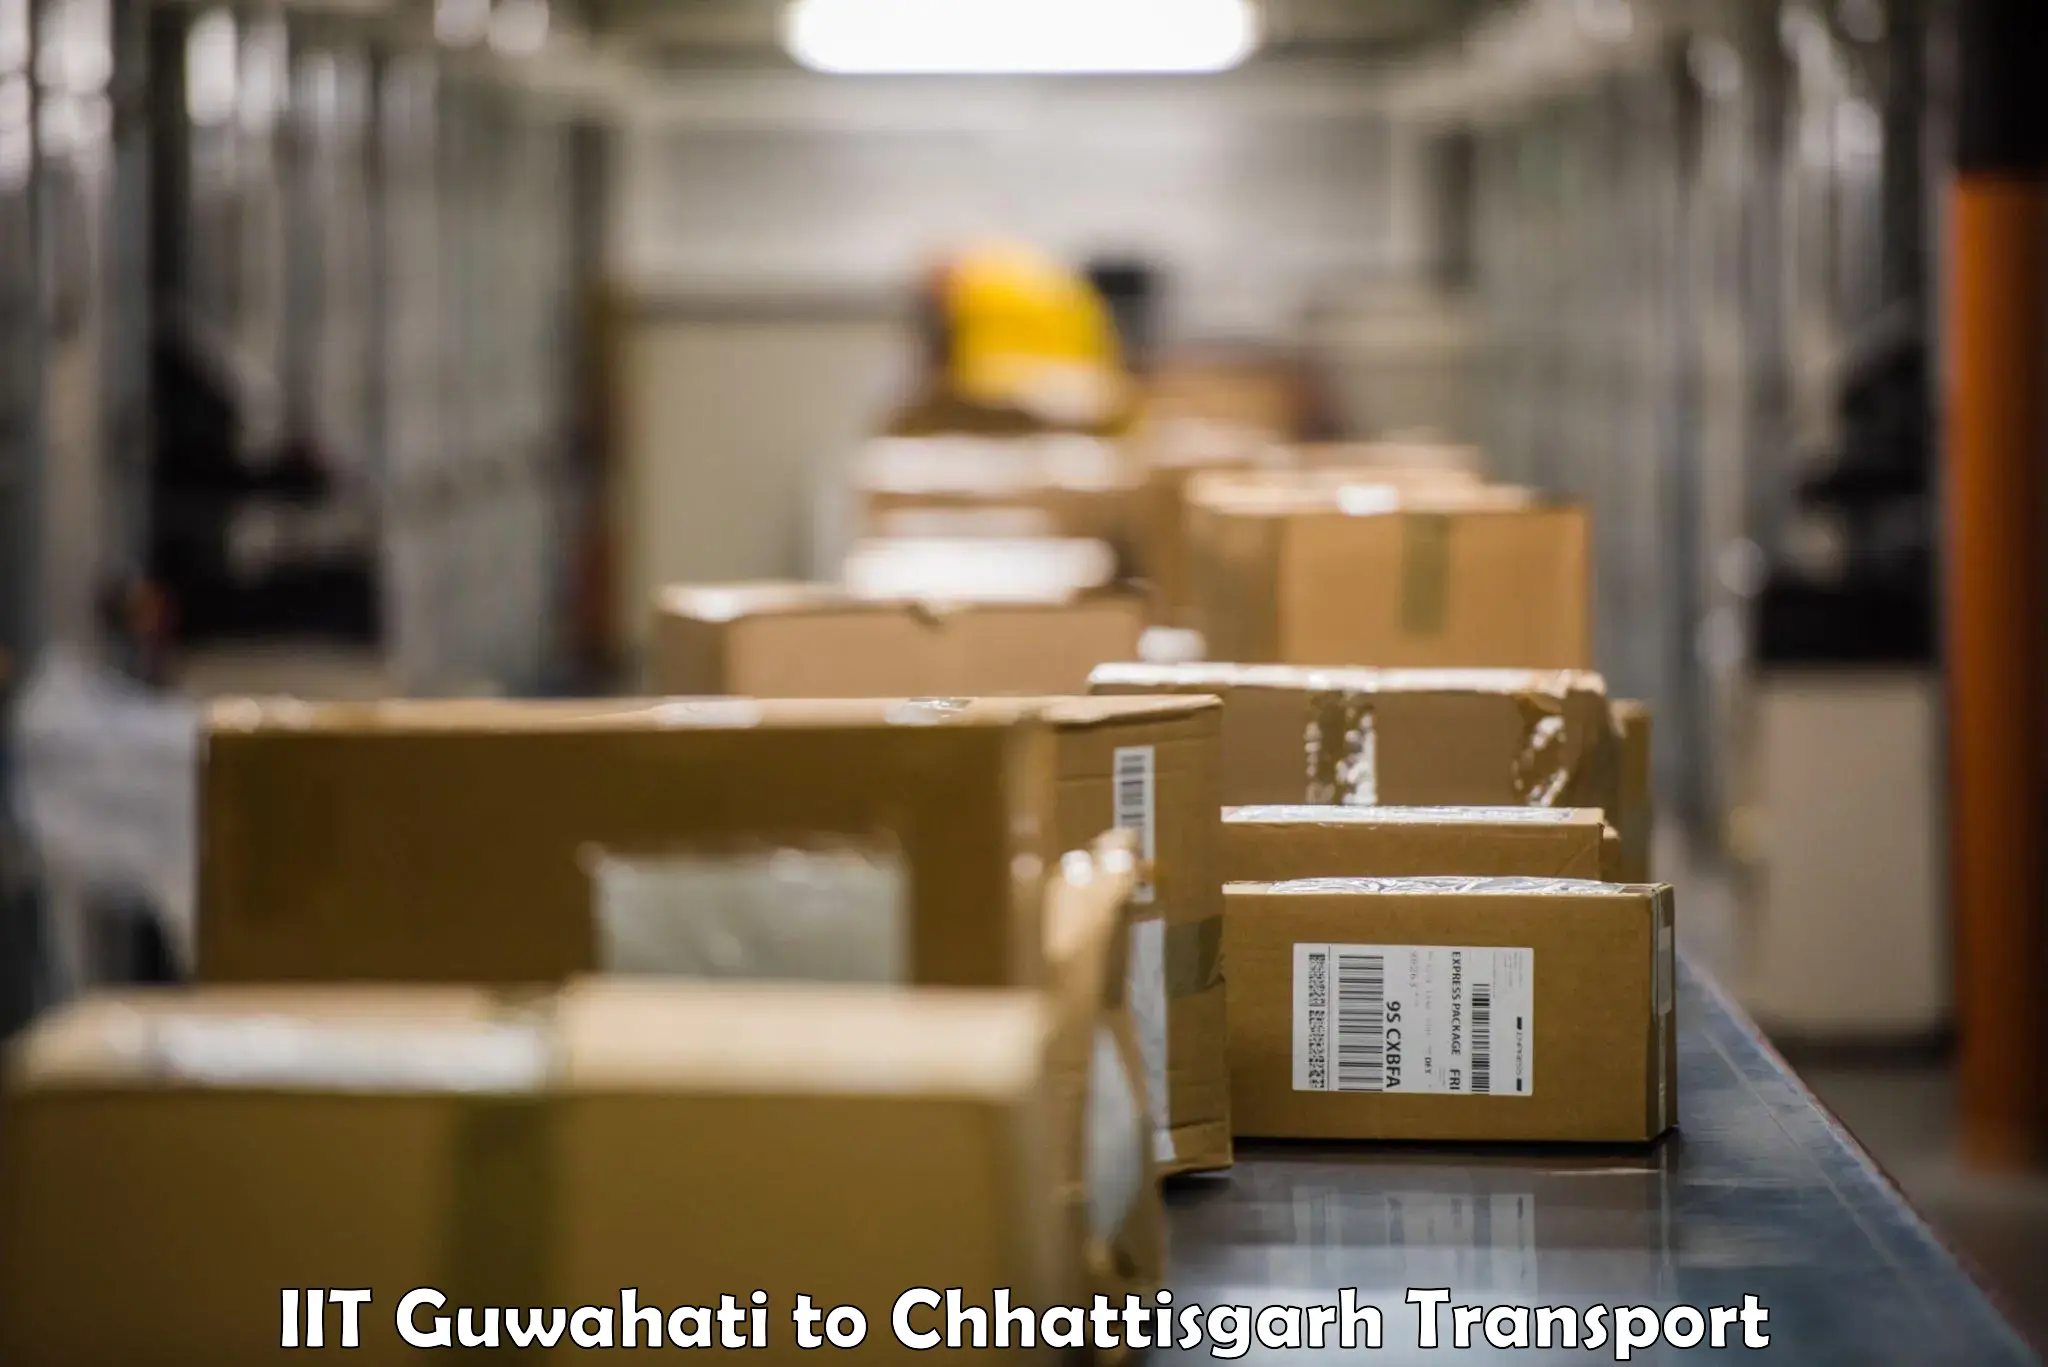 Transport shared services in IIT Guwahati to Chhattisgarh